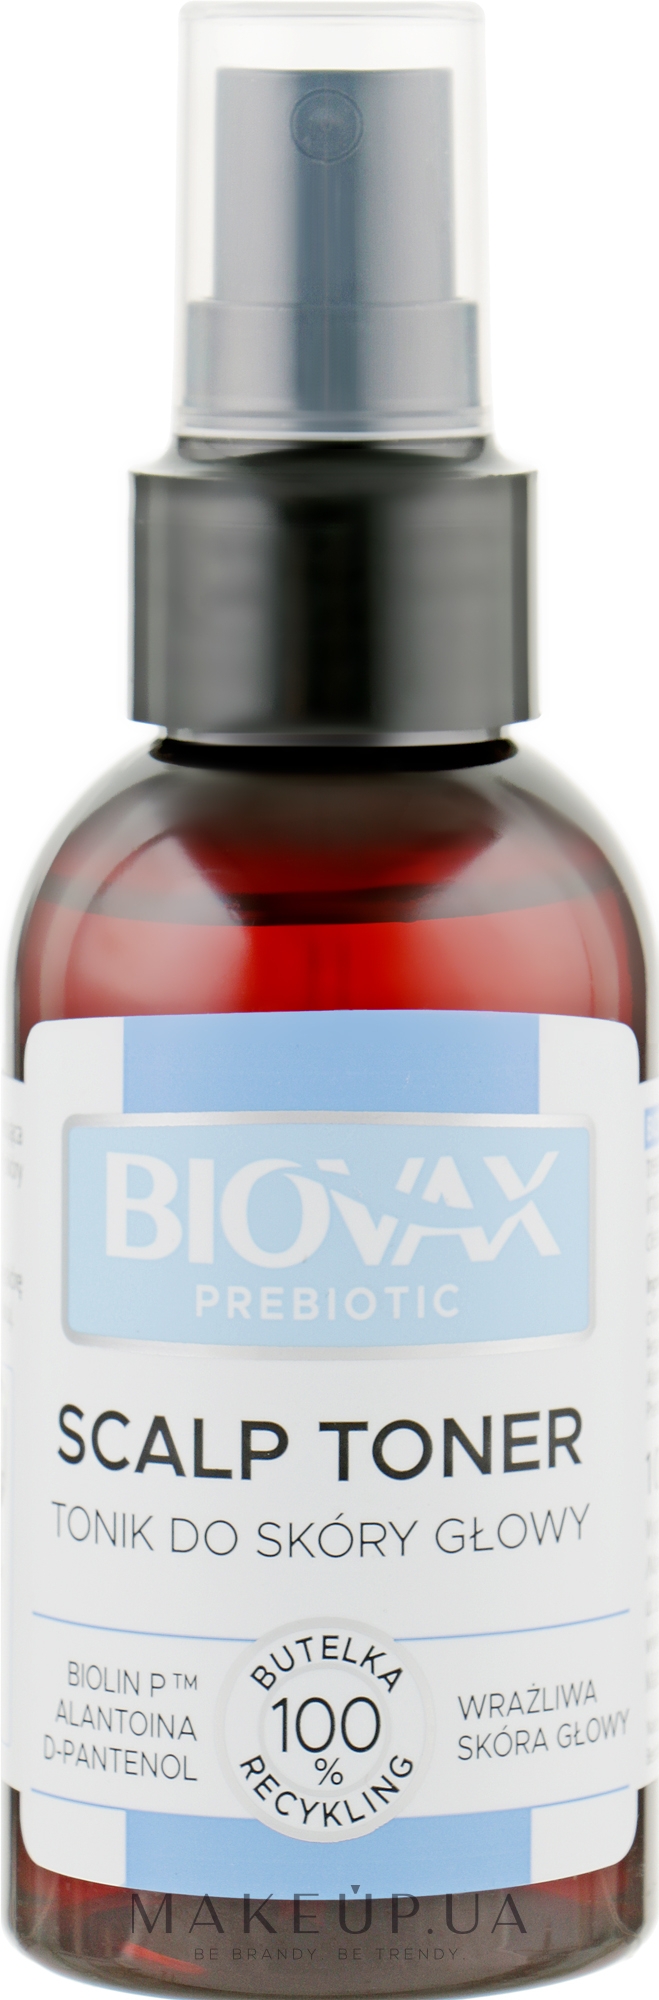 Тоник для кожи головы - Biovax Prebiotic Scalp Toner  — фото 100ml